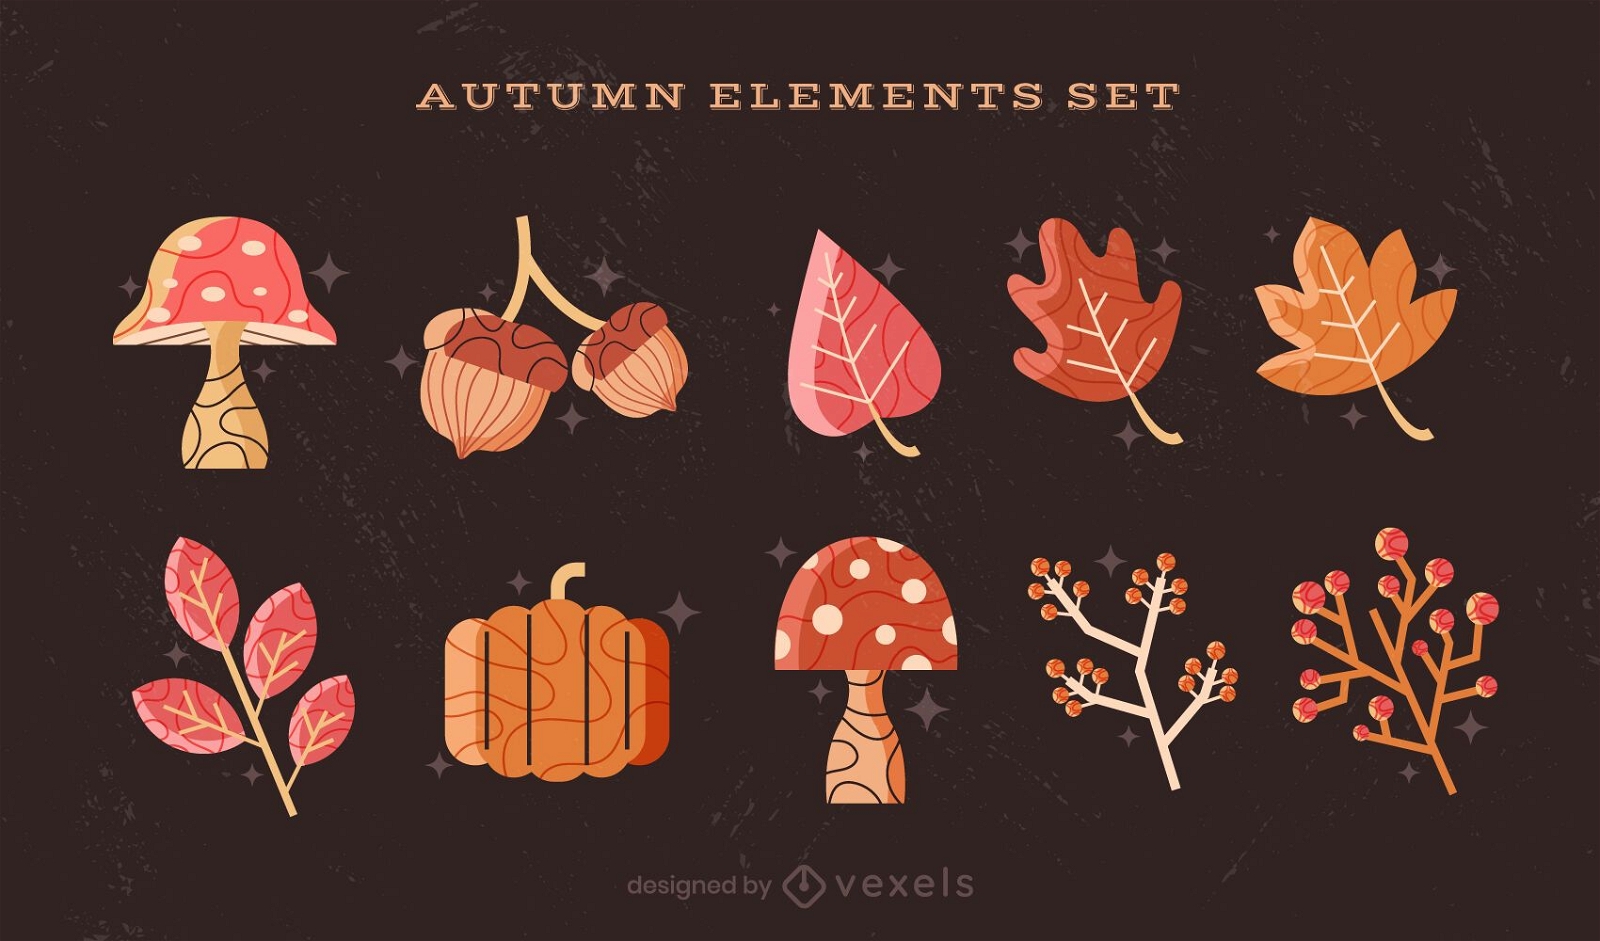 Autumn season nature elements collection set